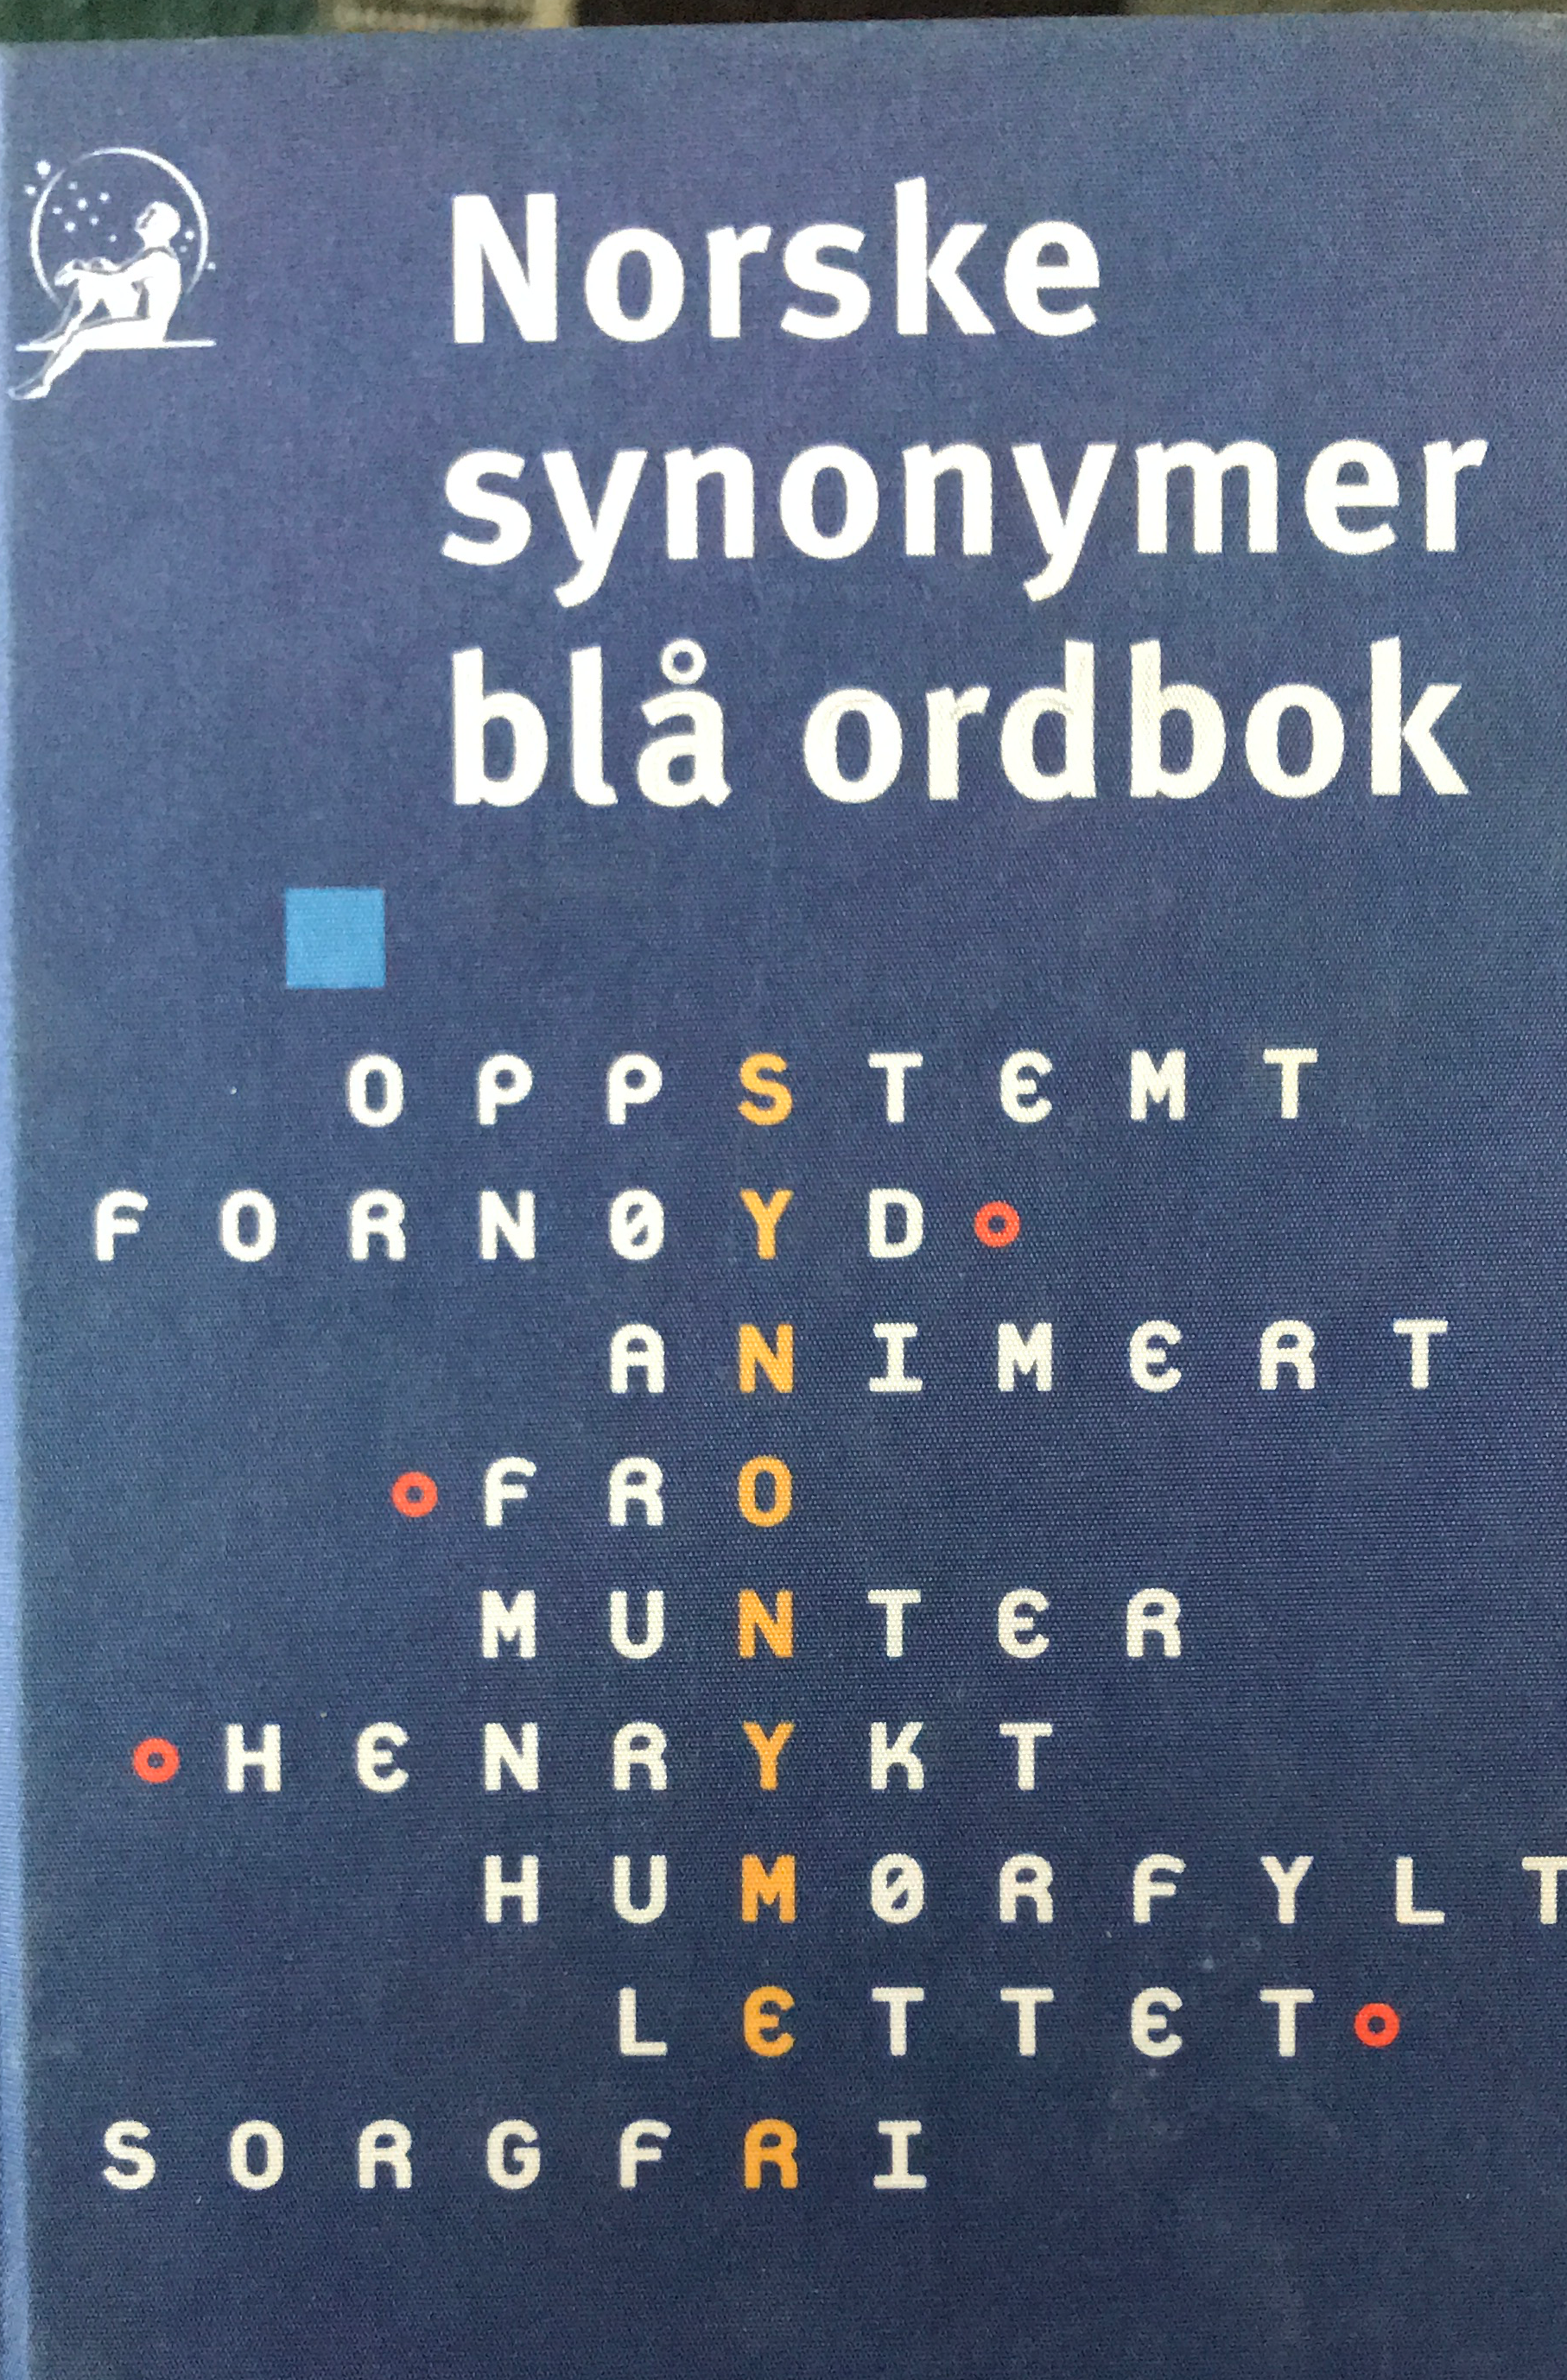 Norske synonymer blå ordbok